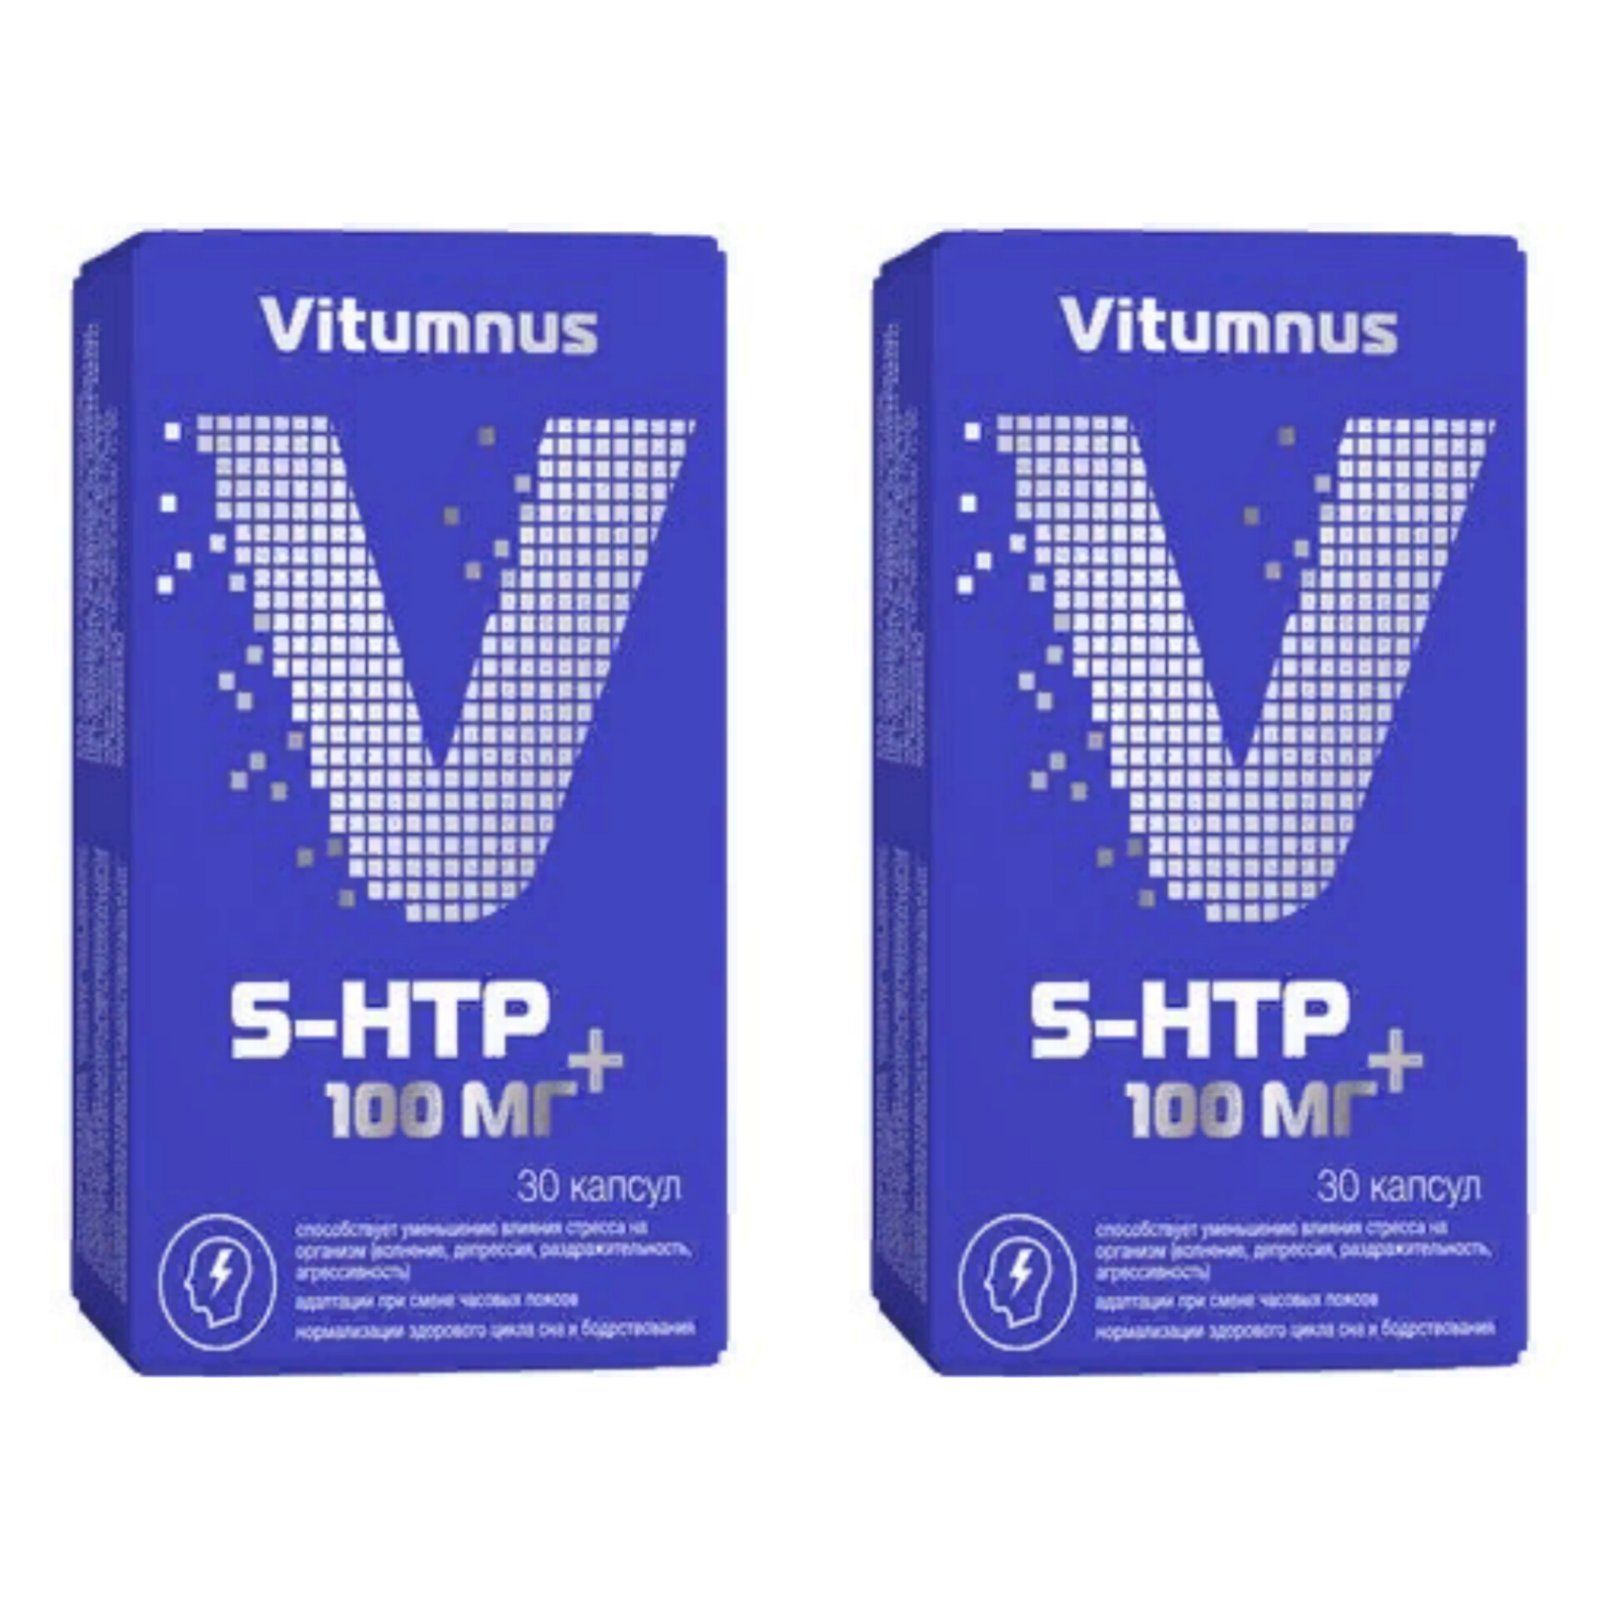 Vitumnus д3 витамин. Vitumnus 5 Htp. Vitumnus для мужчин. БАД успокаивающего действия. Vitumnus витамины для мужчин.